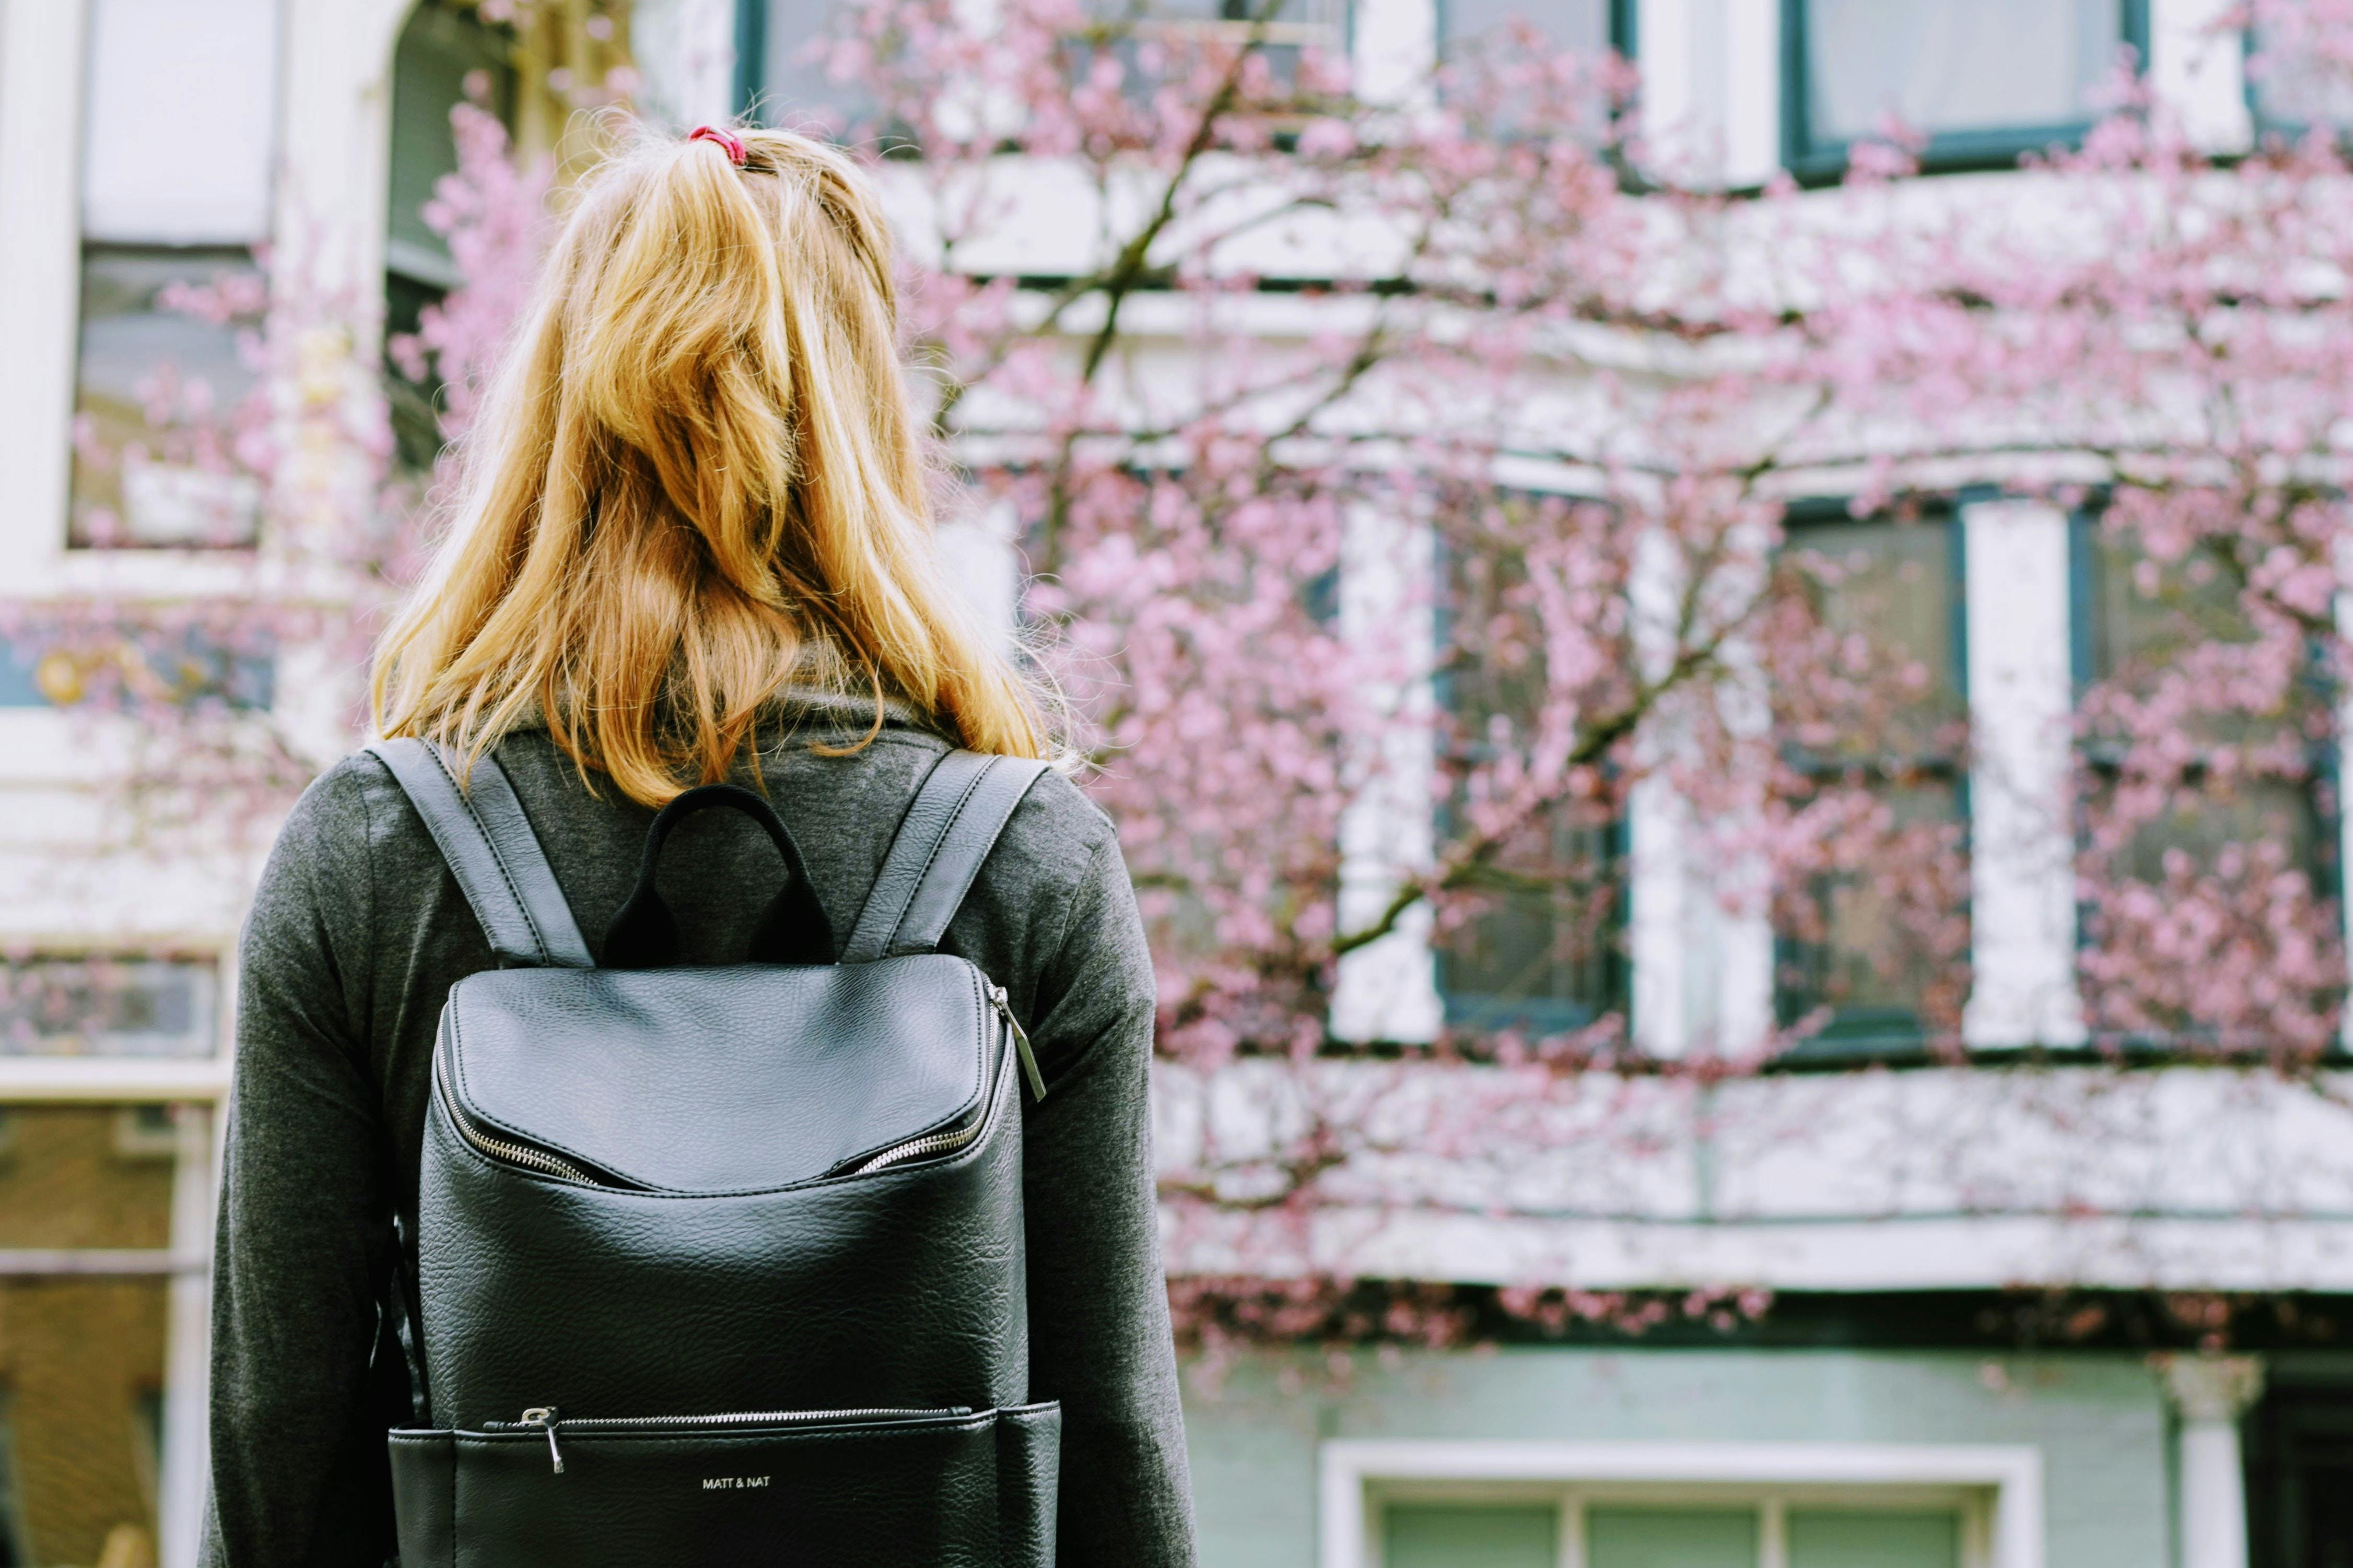 Backshot of a girl wearing a backpack | Source: Pexels